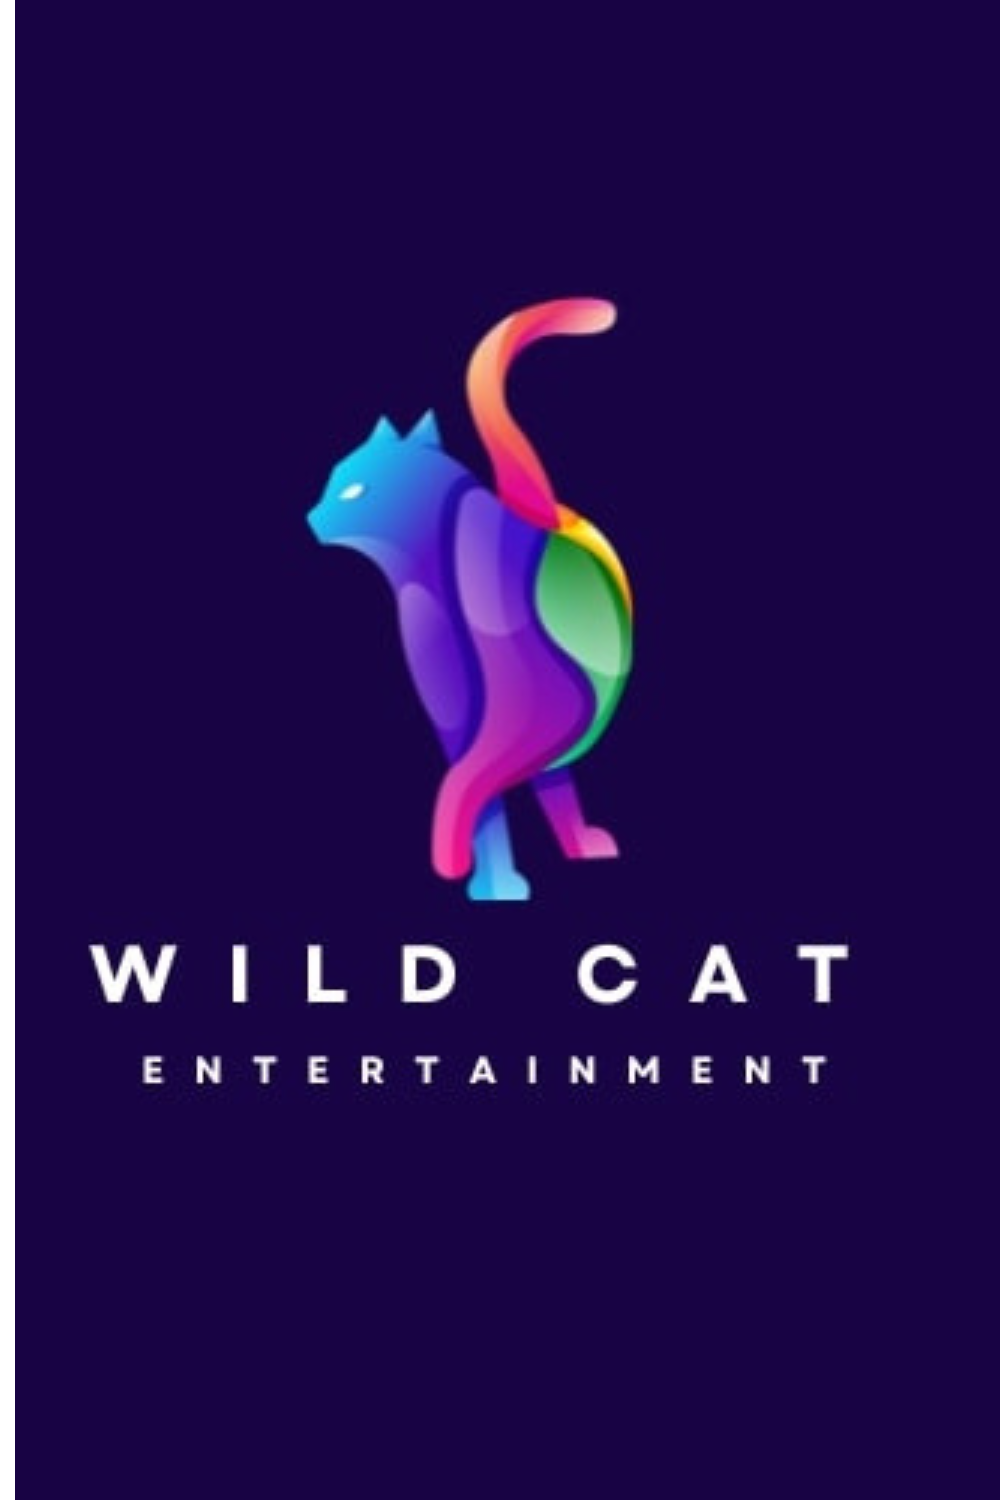 Wild Cat Logo pinterest image.